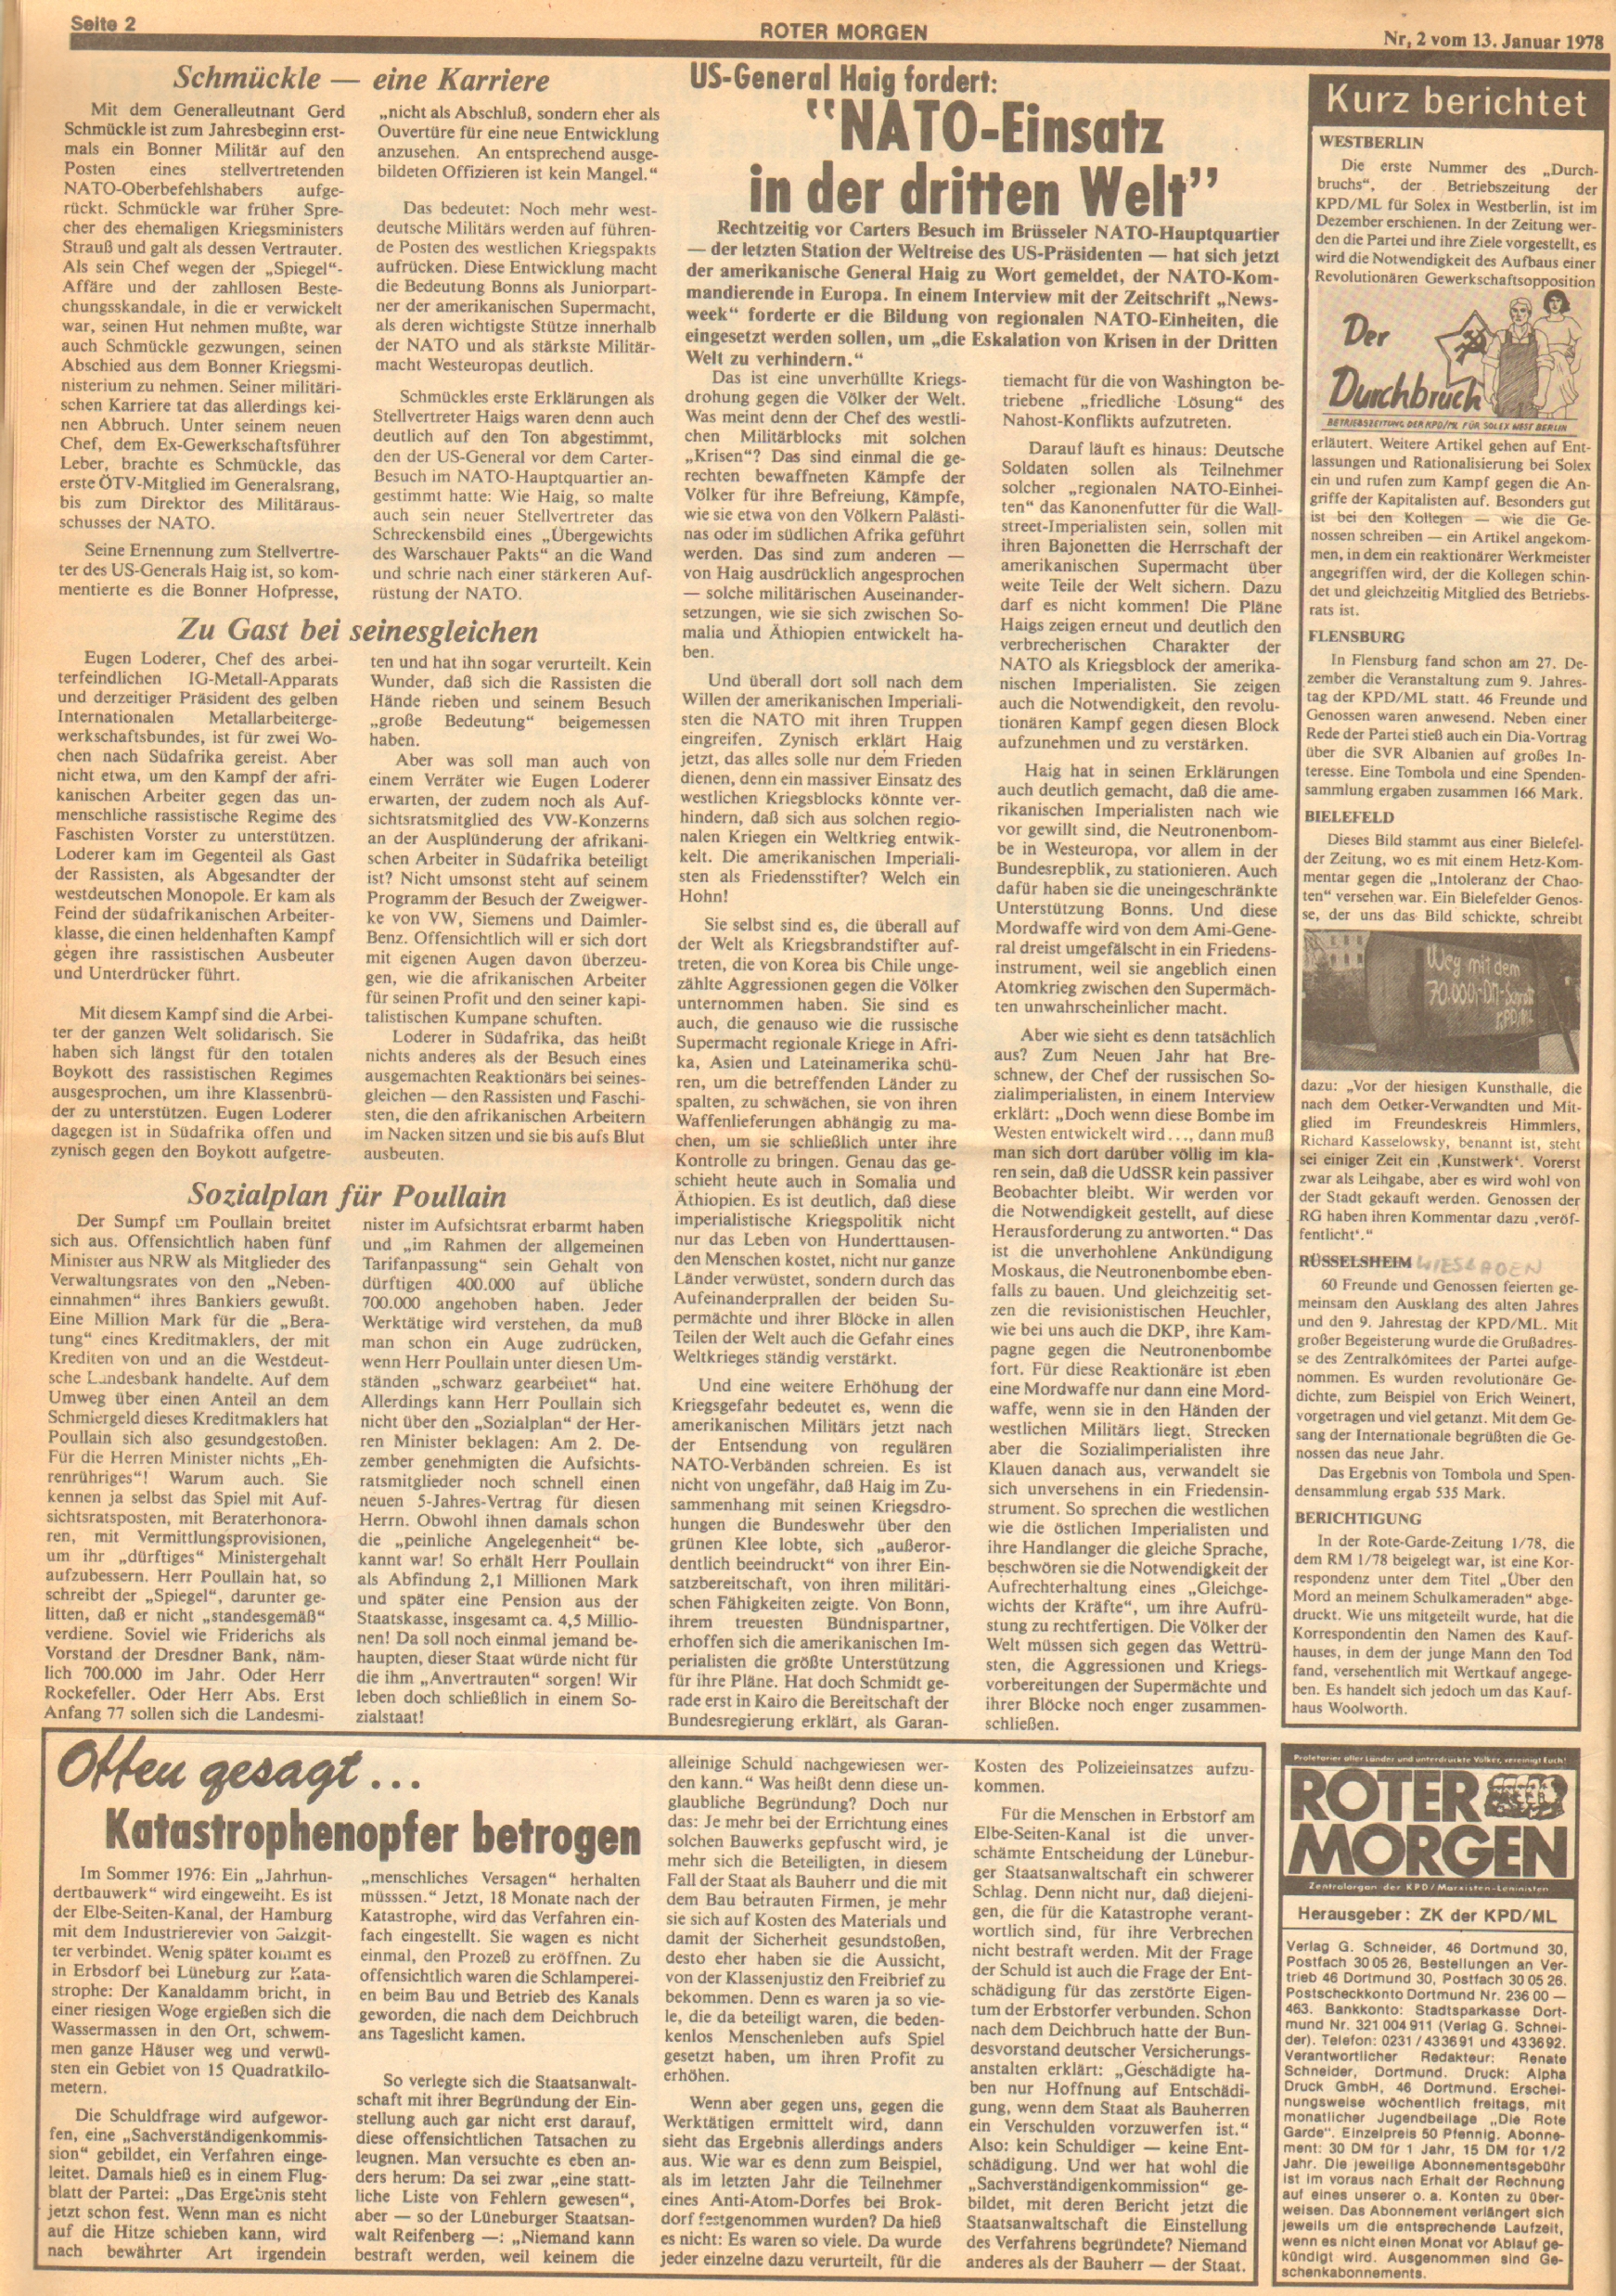 Roter Morgen, 12. Jg., 13. Januar 1978, Nr. 2, Seite 2